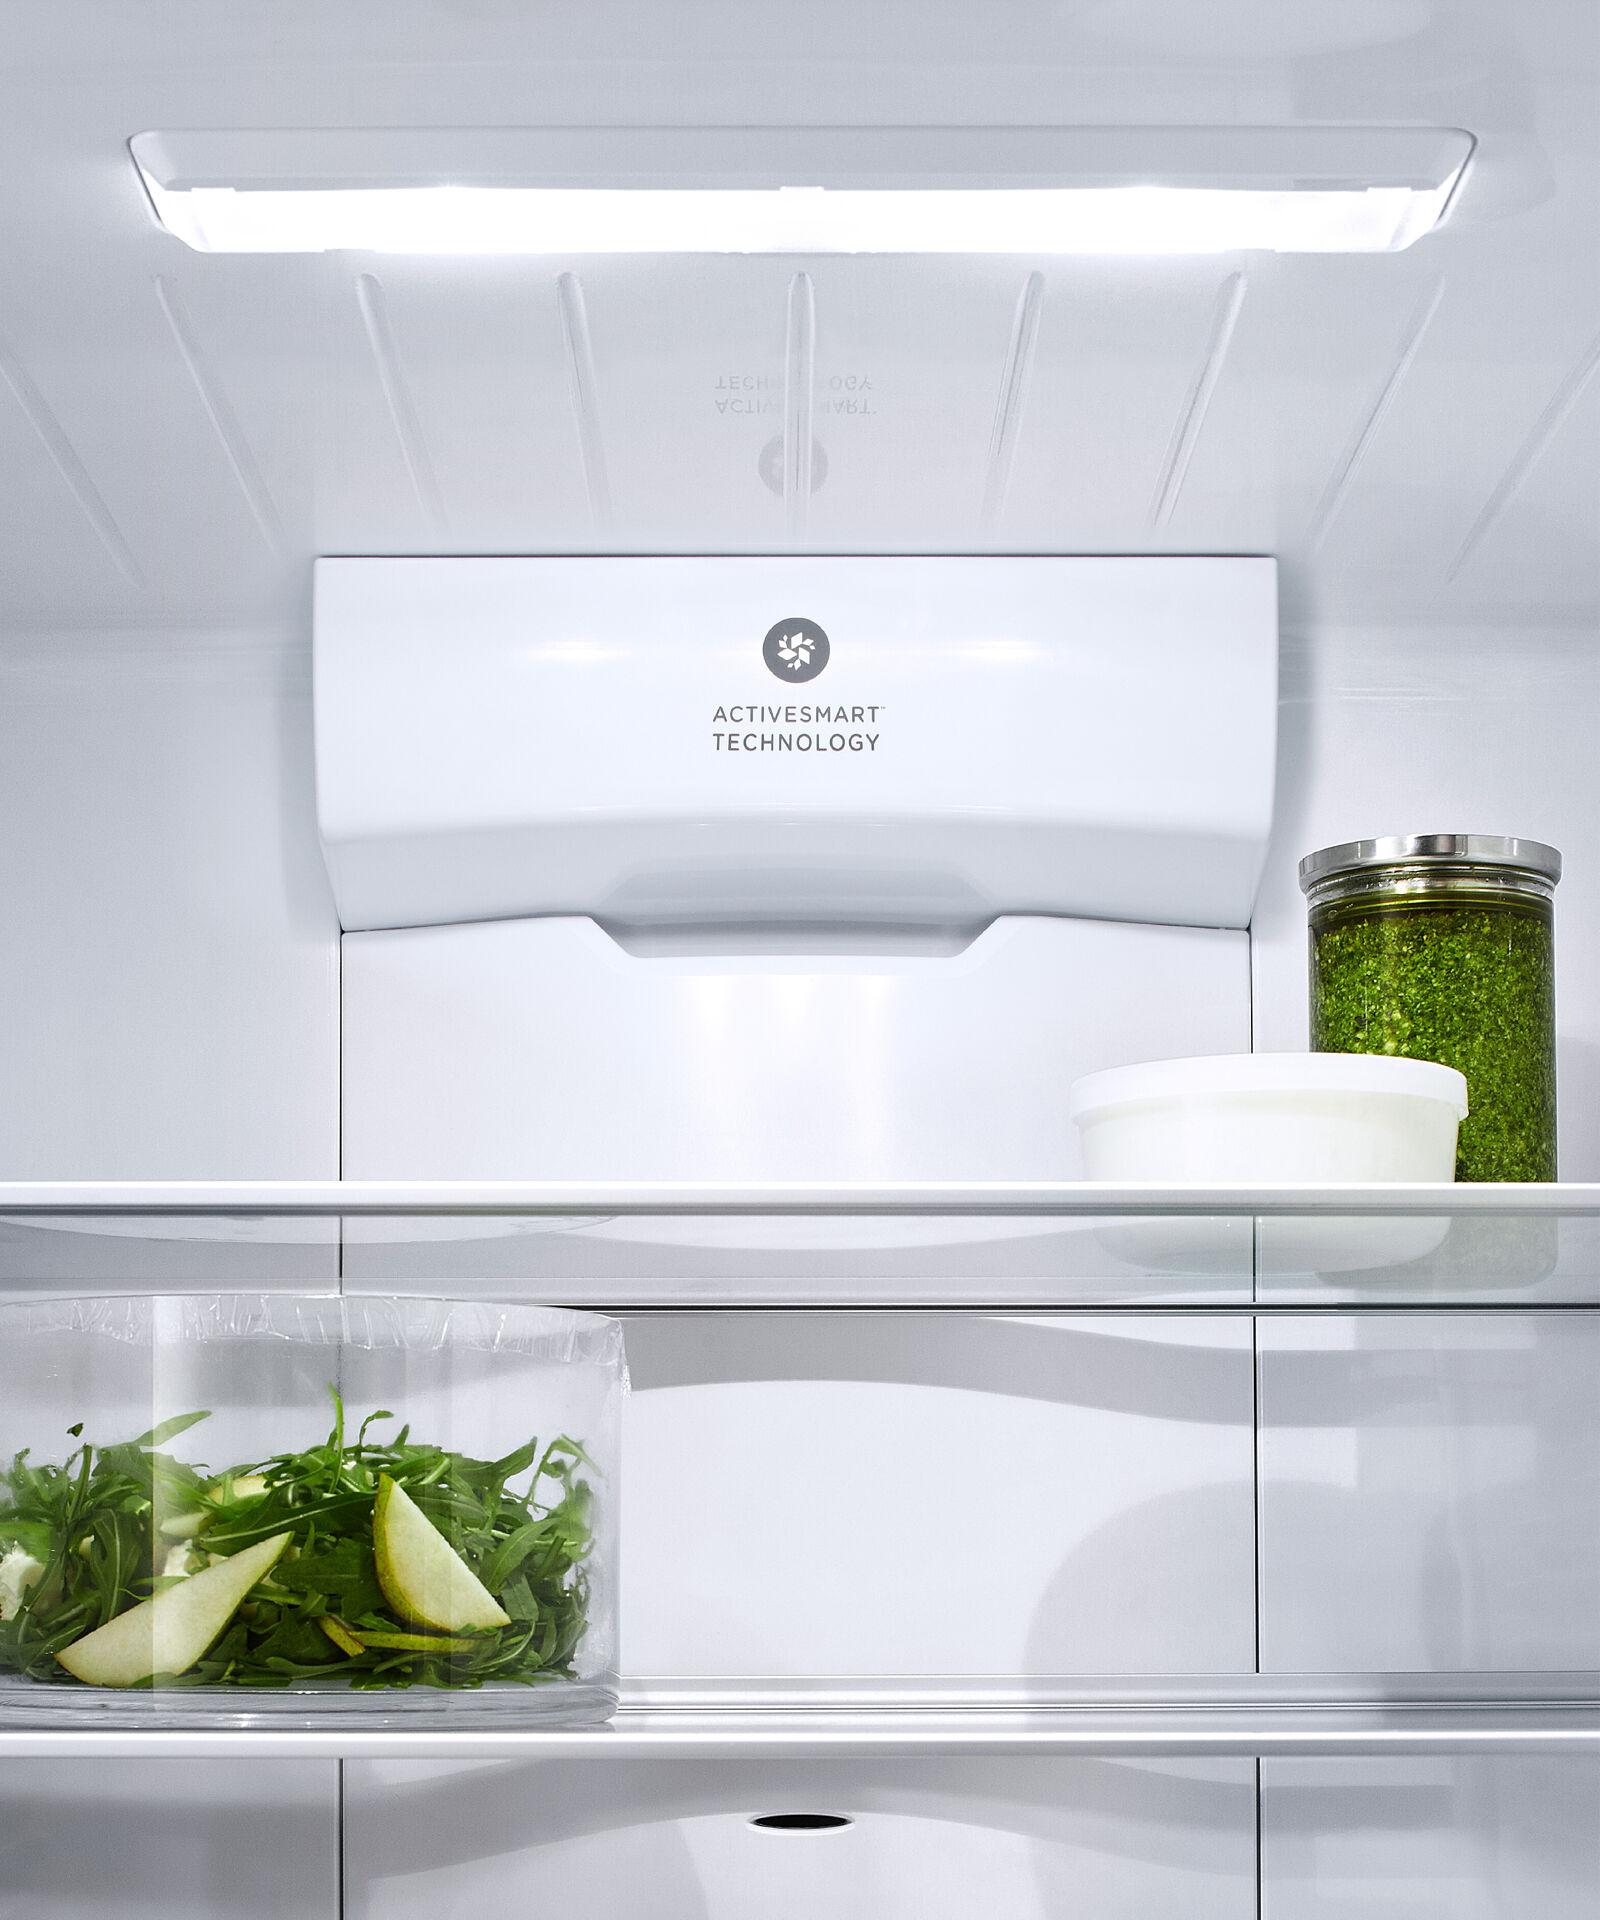 Freestanding Refrigerator Freezer, 79cm, Ice & Water gallery image 3.0